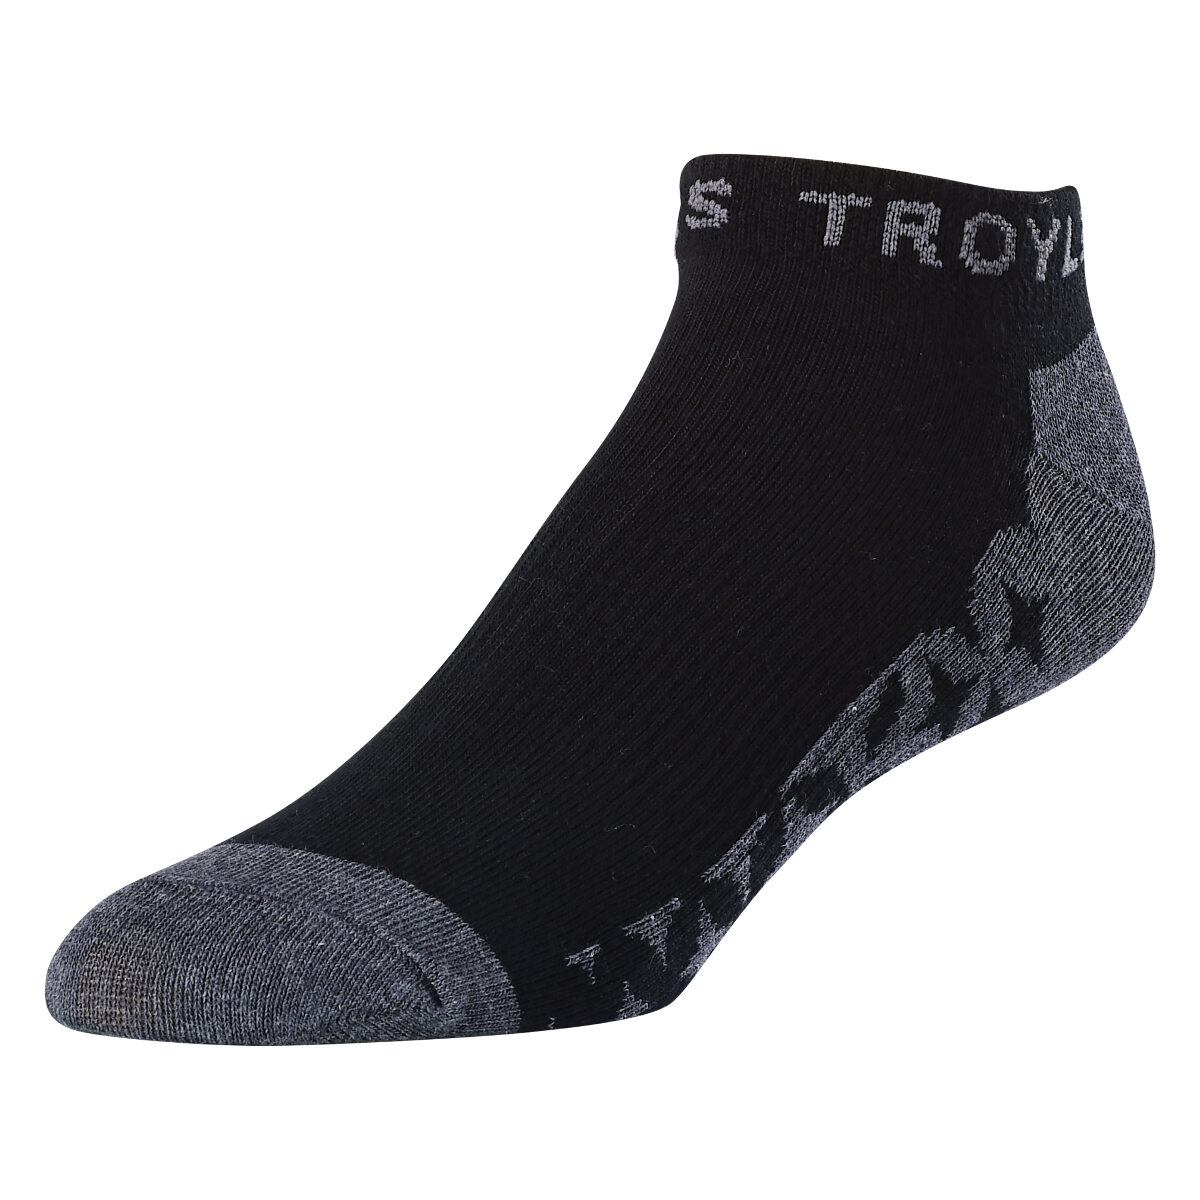 Troy Lee Designs Socks Starburst Ankle Black, 3 Pack